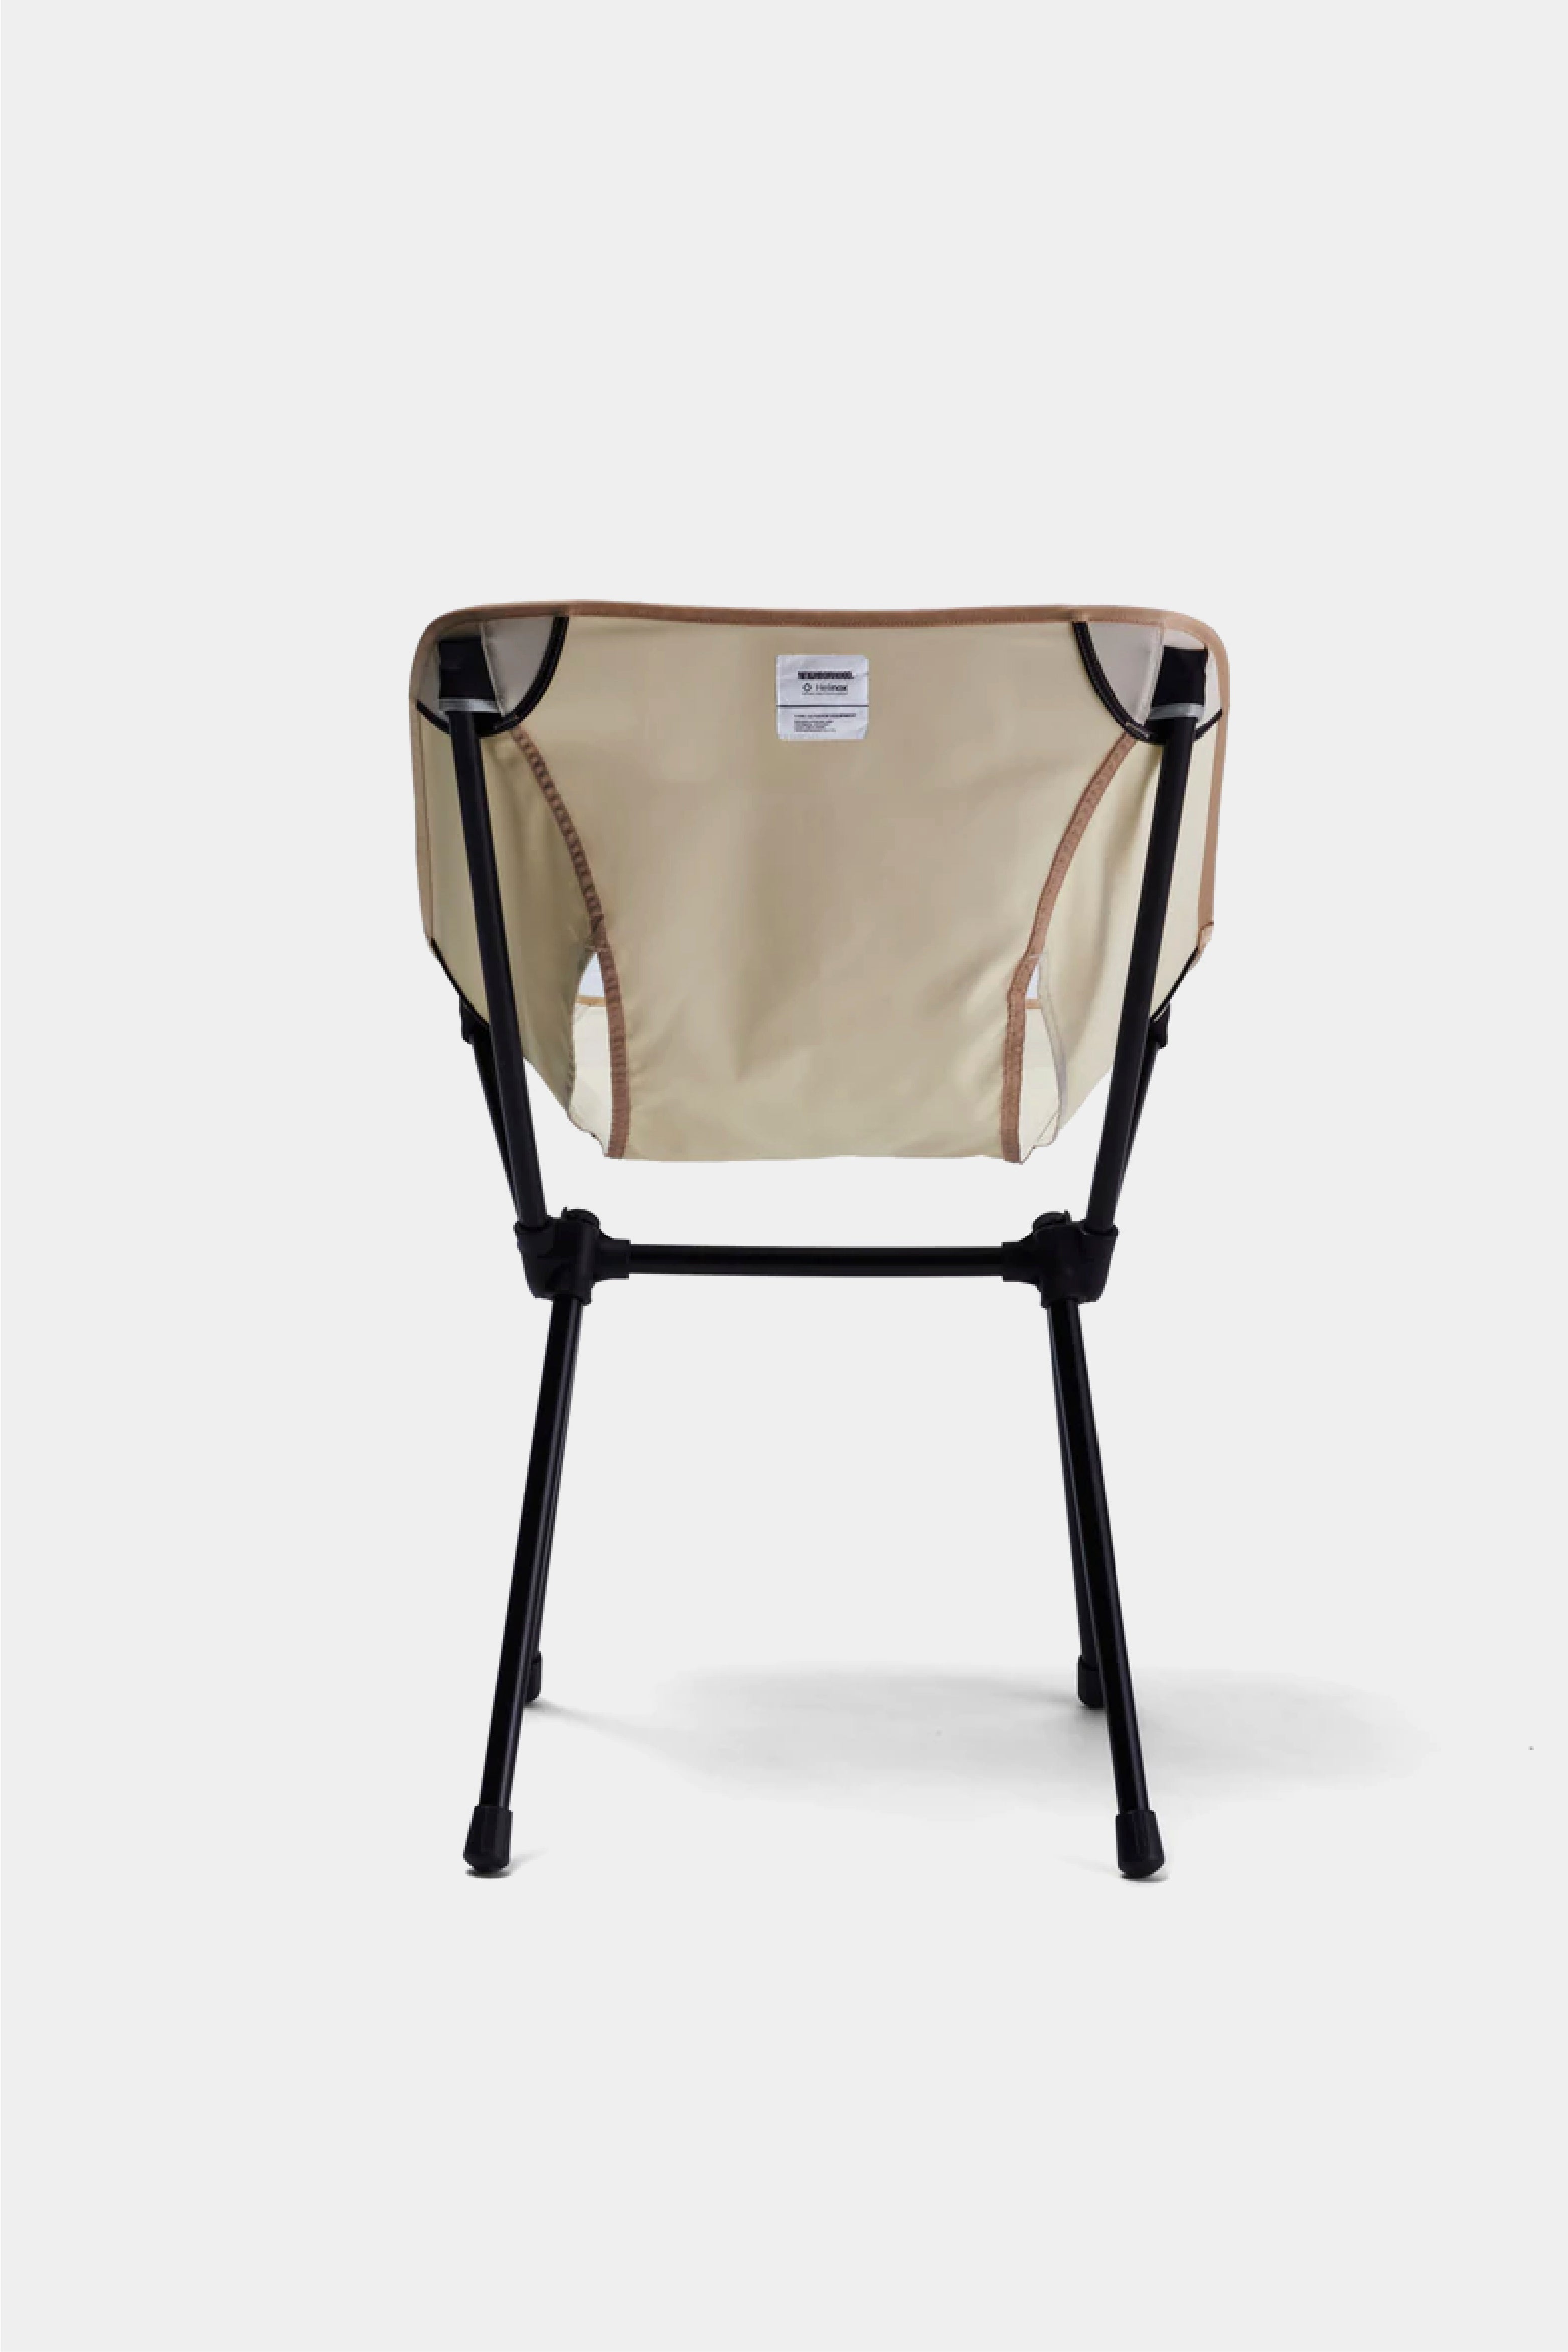 Selectshop FRAME - NEIGHBORHOOD HX / E-Cafe Camp Chair All-Accessories Dubai